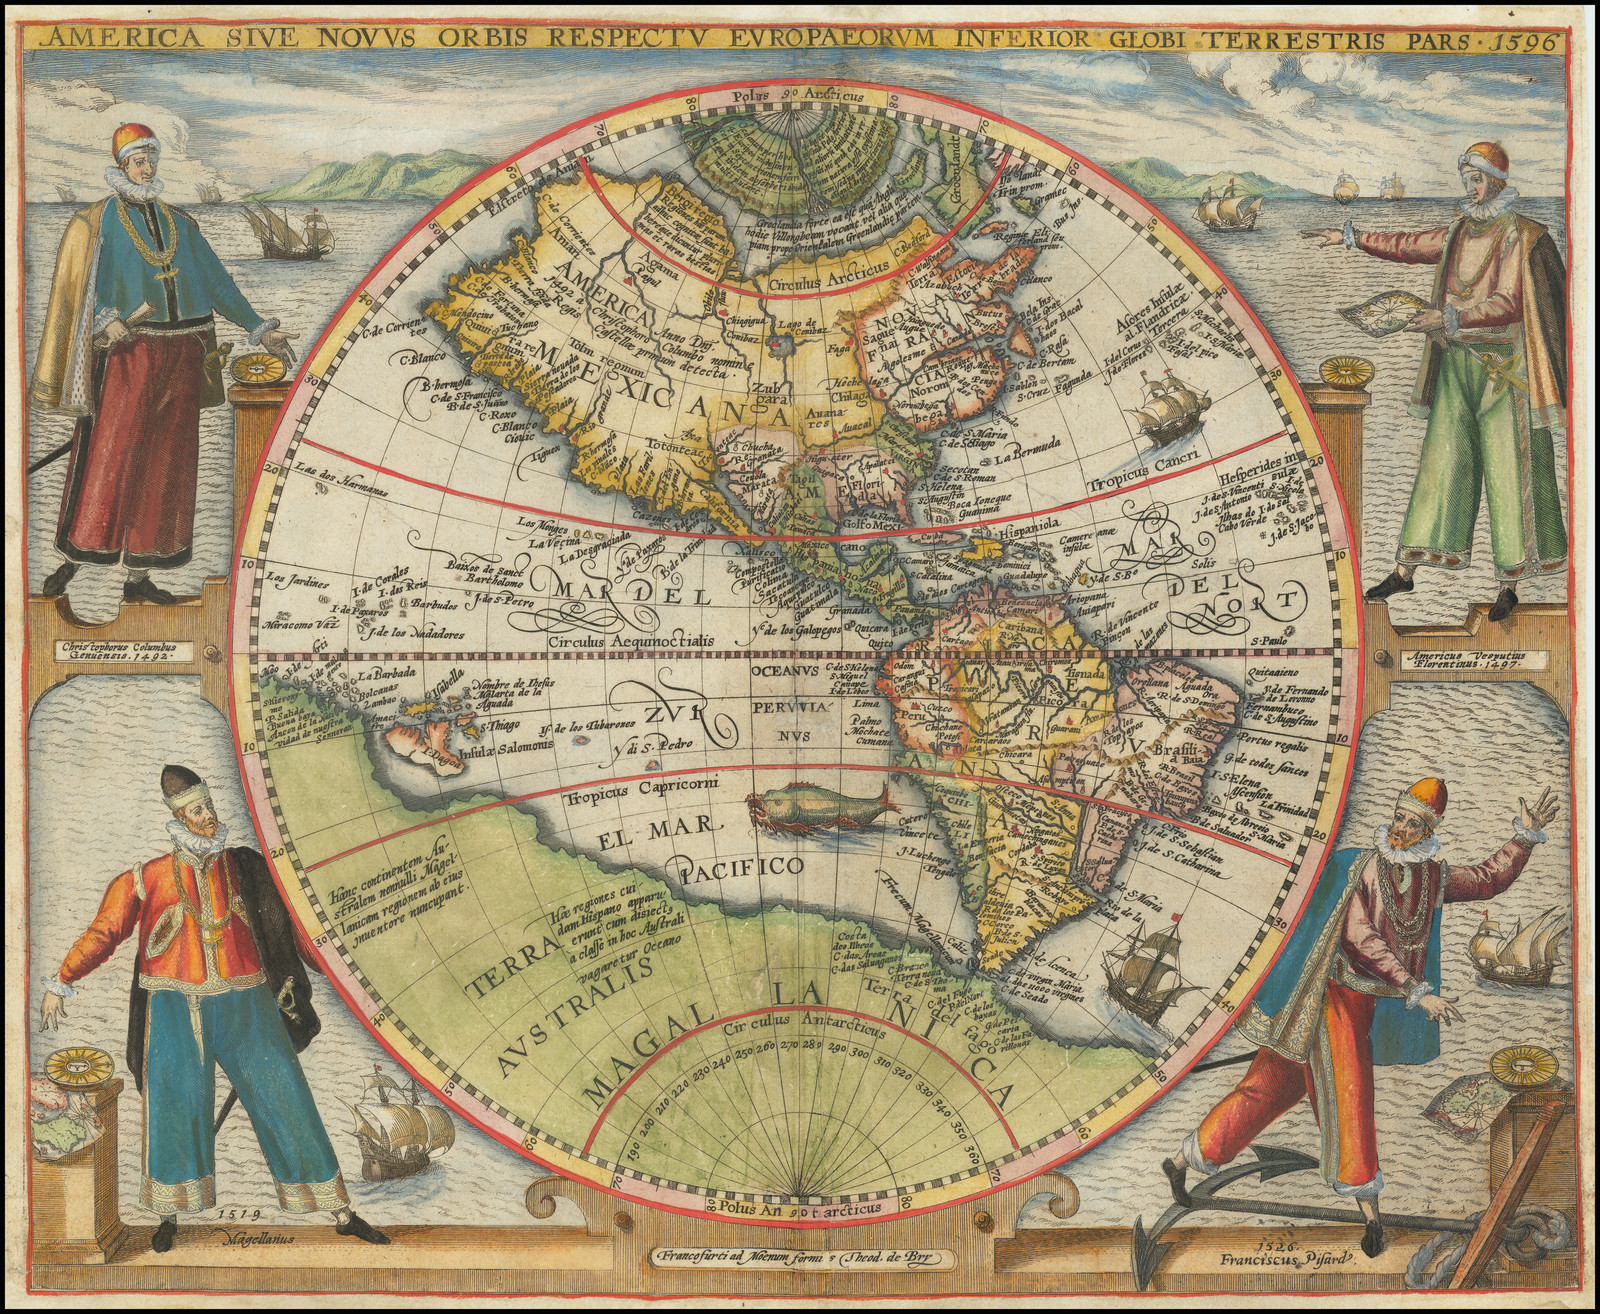 America Sive Novus Orbis Respectu Europaeorum Inferior Globi Terrestris Pars  1596